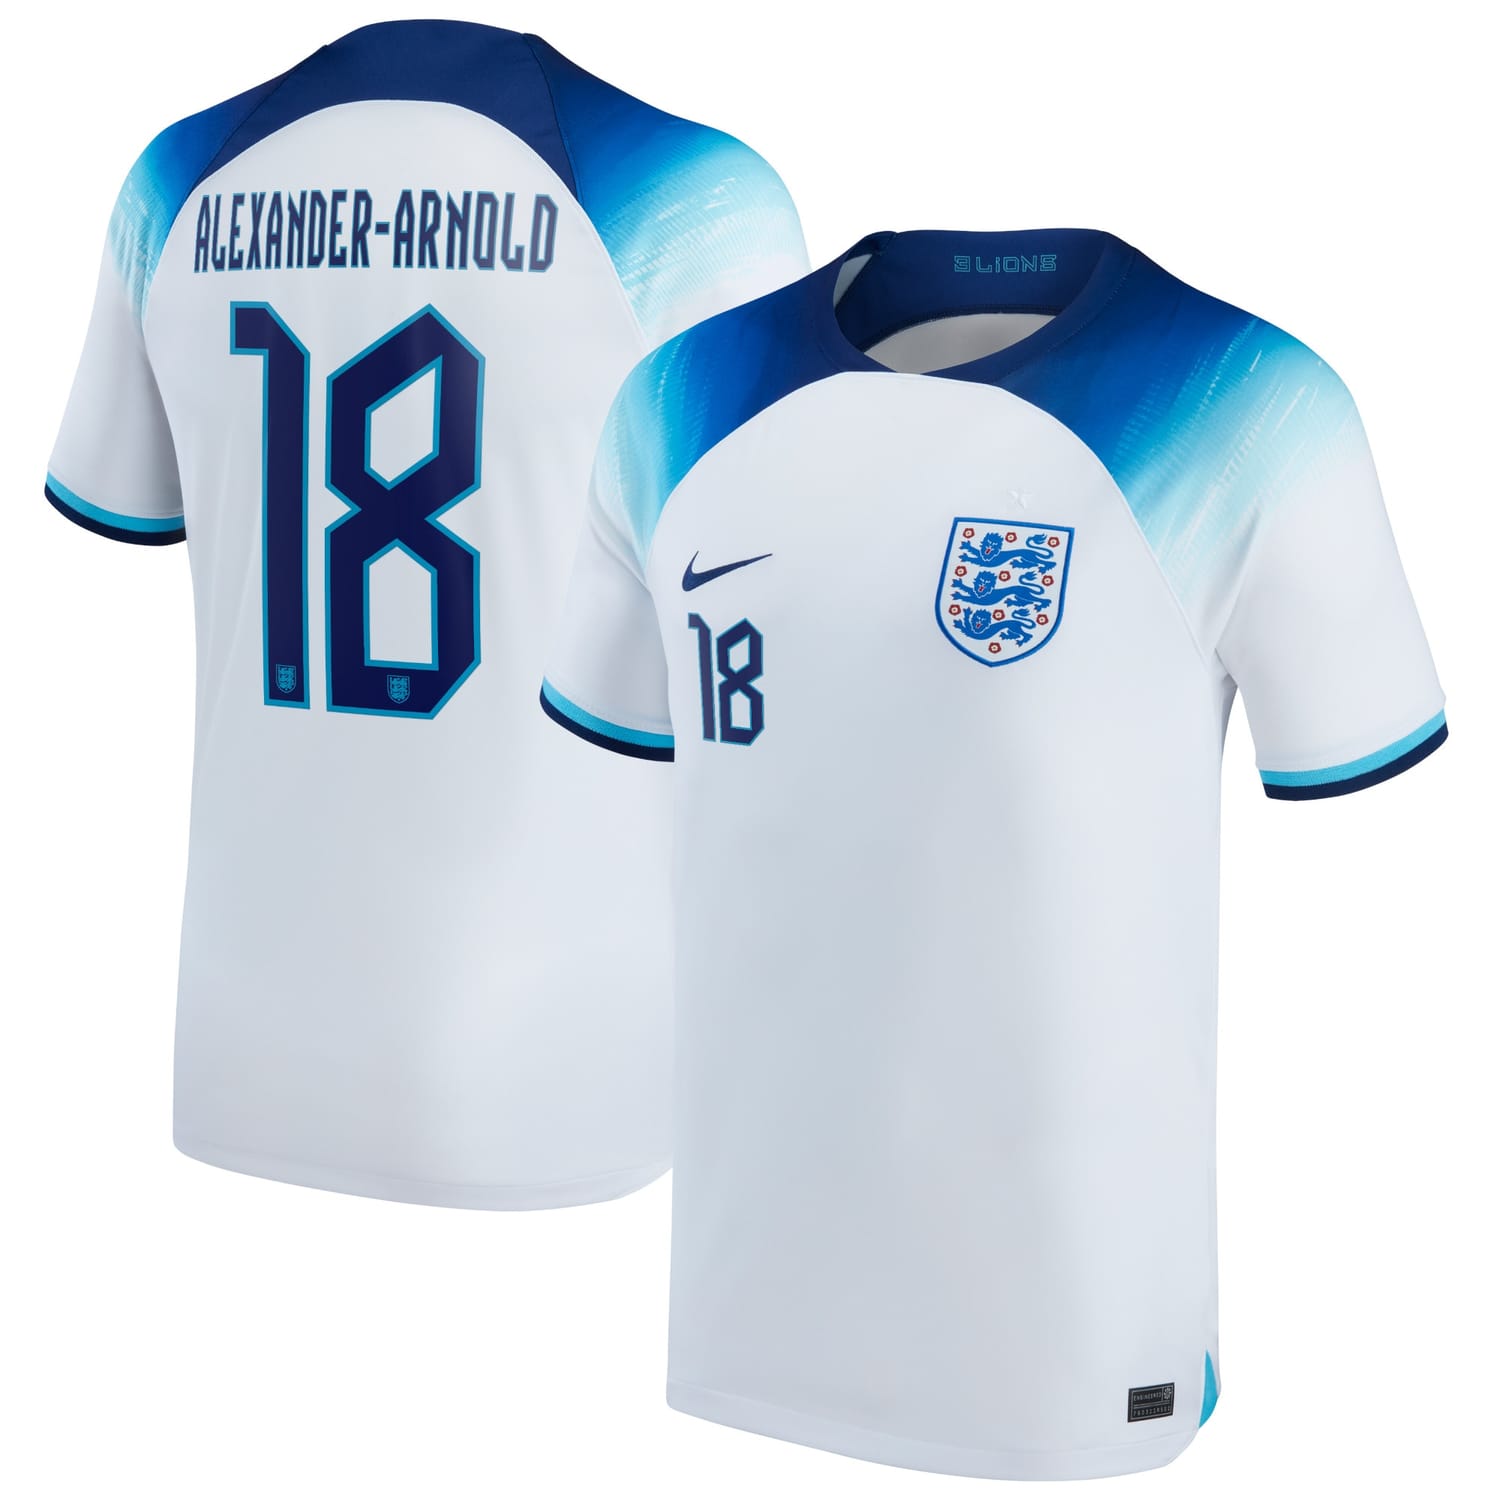 England National Team Home Jersey Shirt 2022 player Trent Alexander-Arnold 18 printing for Men